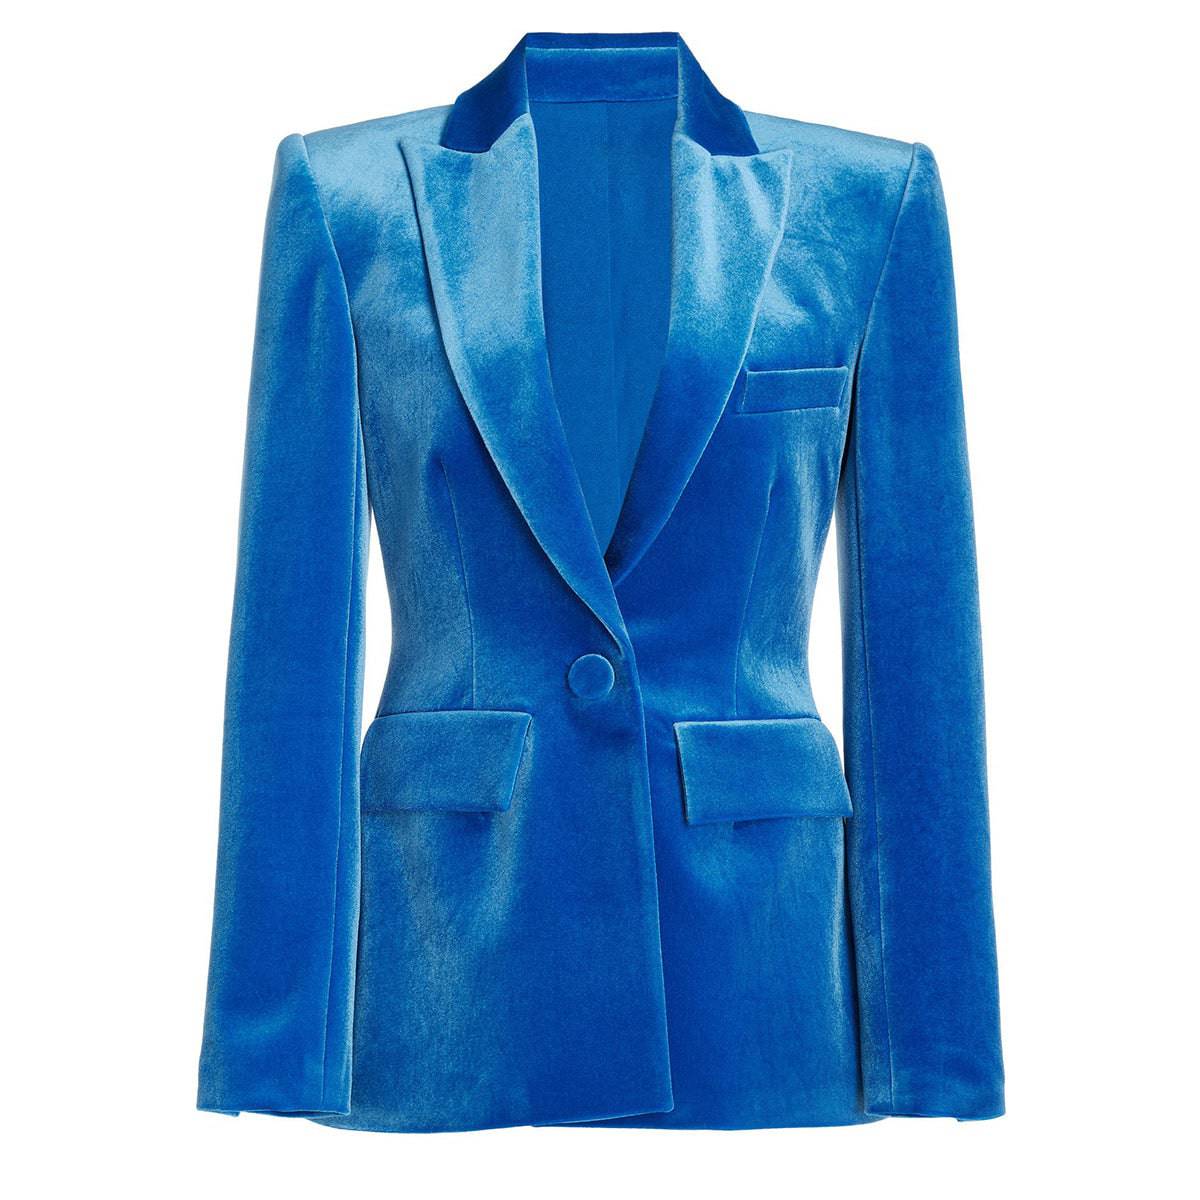 Giselle Cotton-Velvet Suit Jacket - Hot fashionista